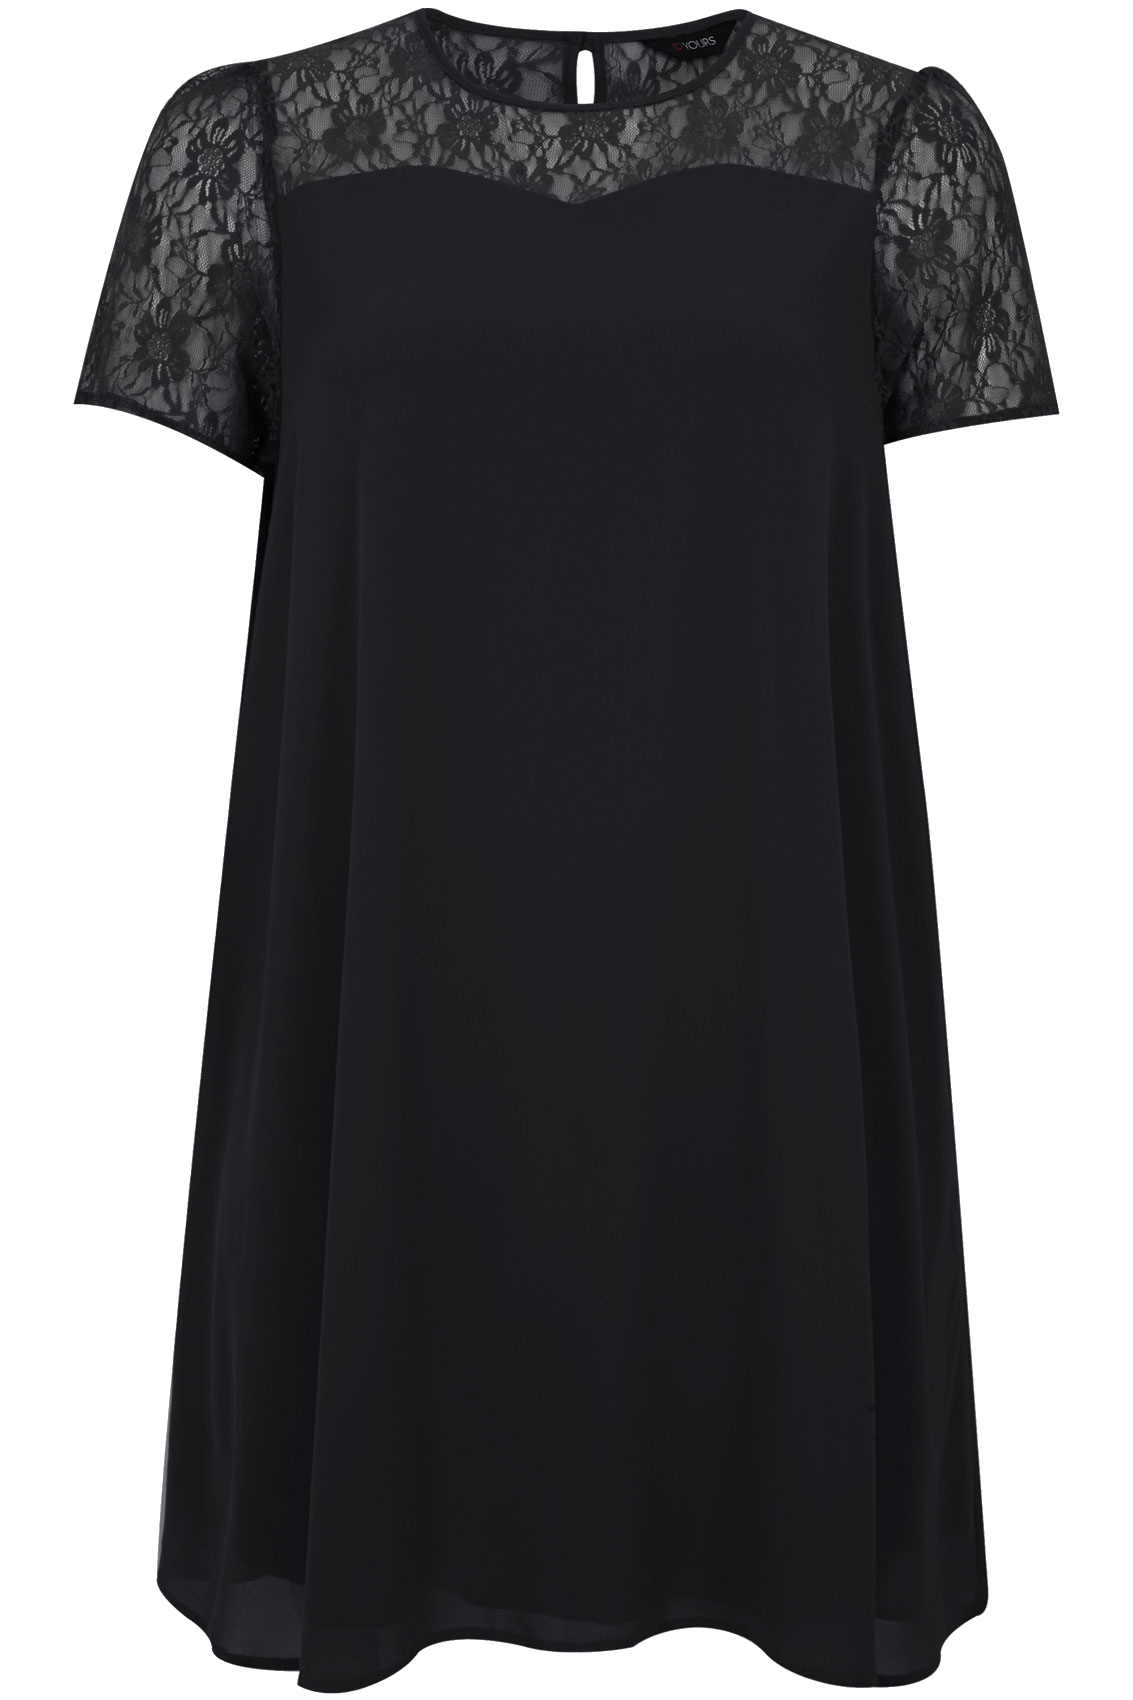 Black Chiffon Swing Dress With Lace Contrast plus size 16,18,20,22,24 ...